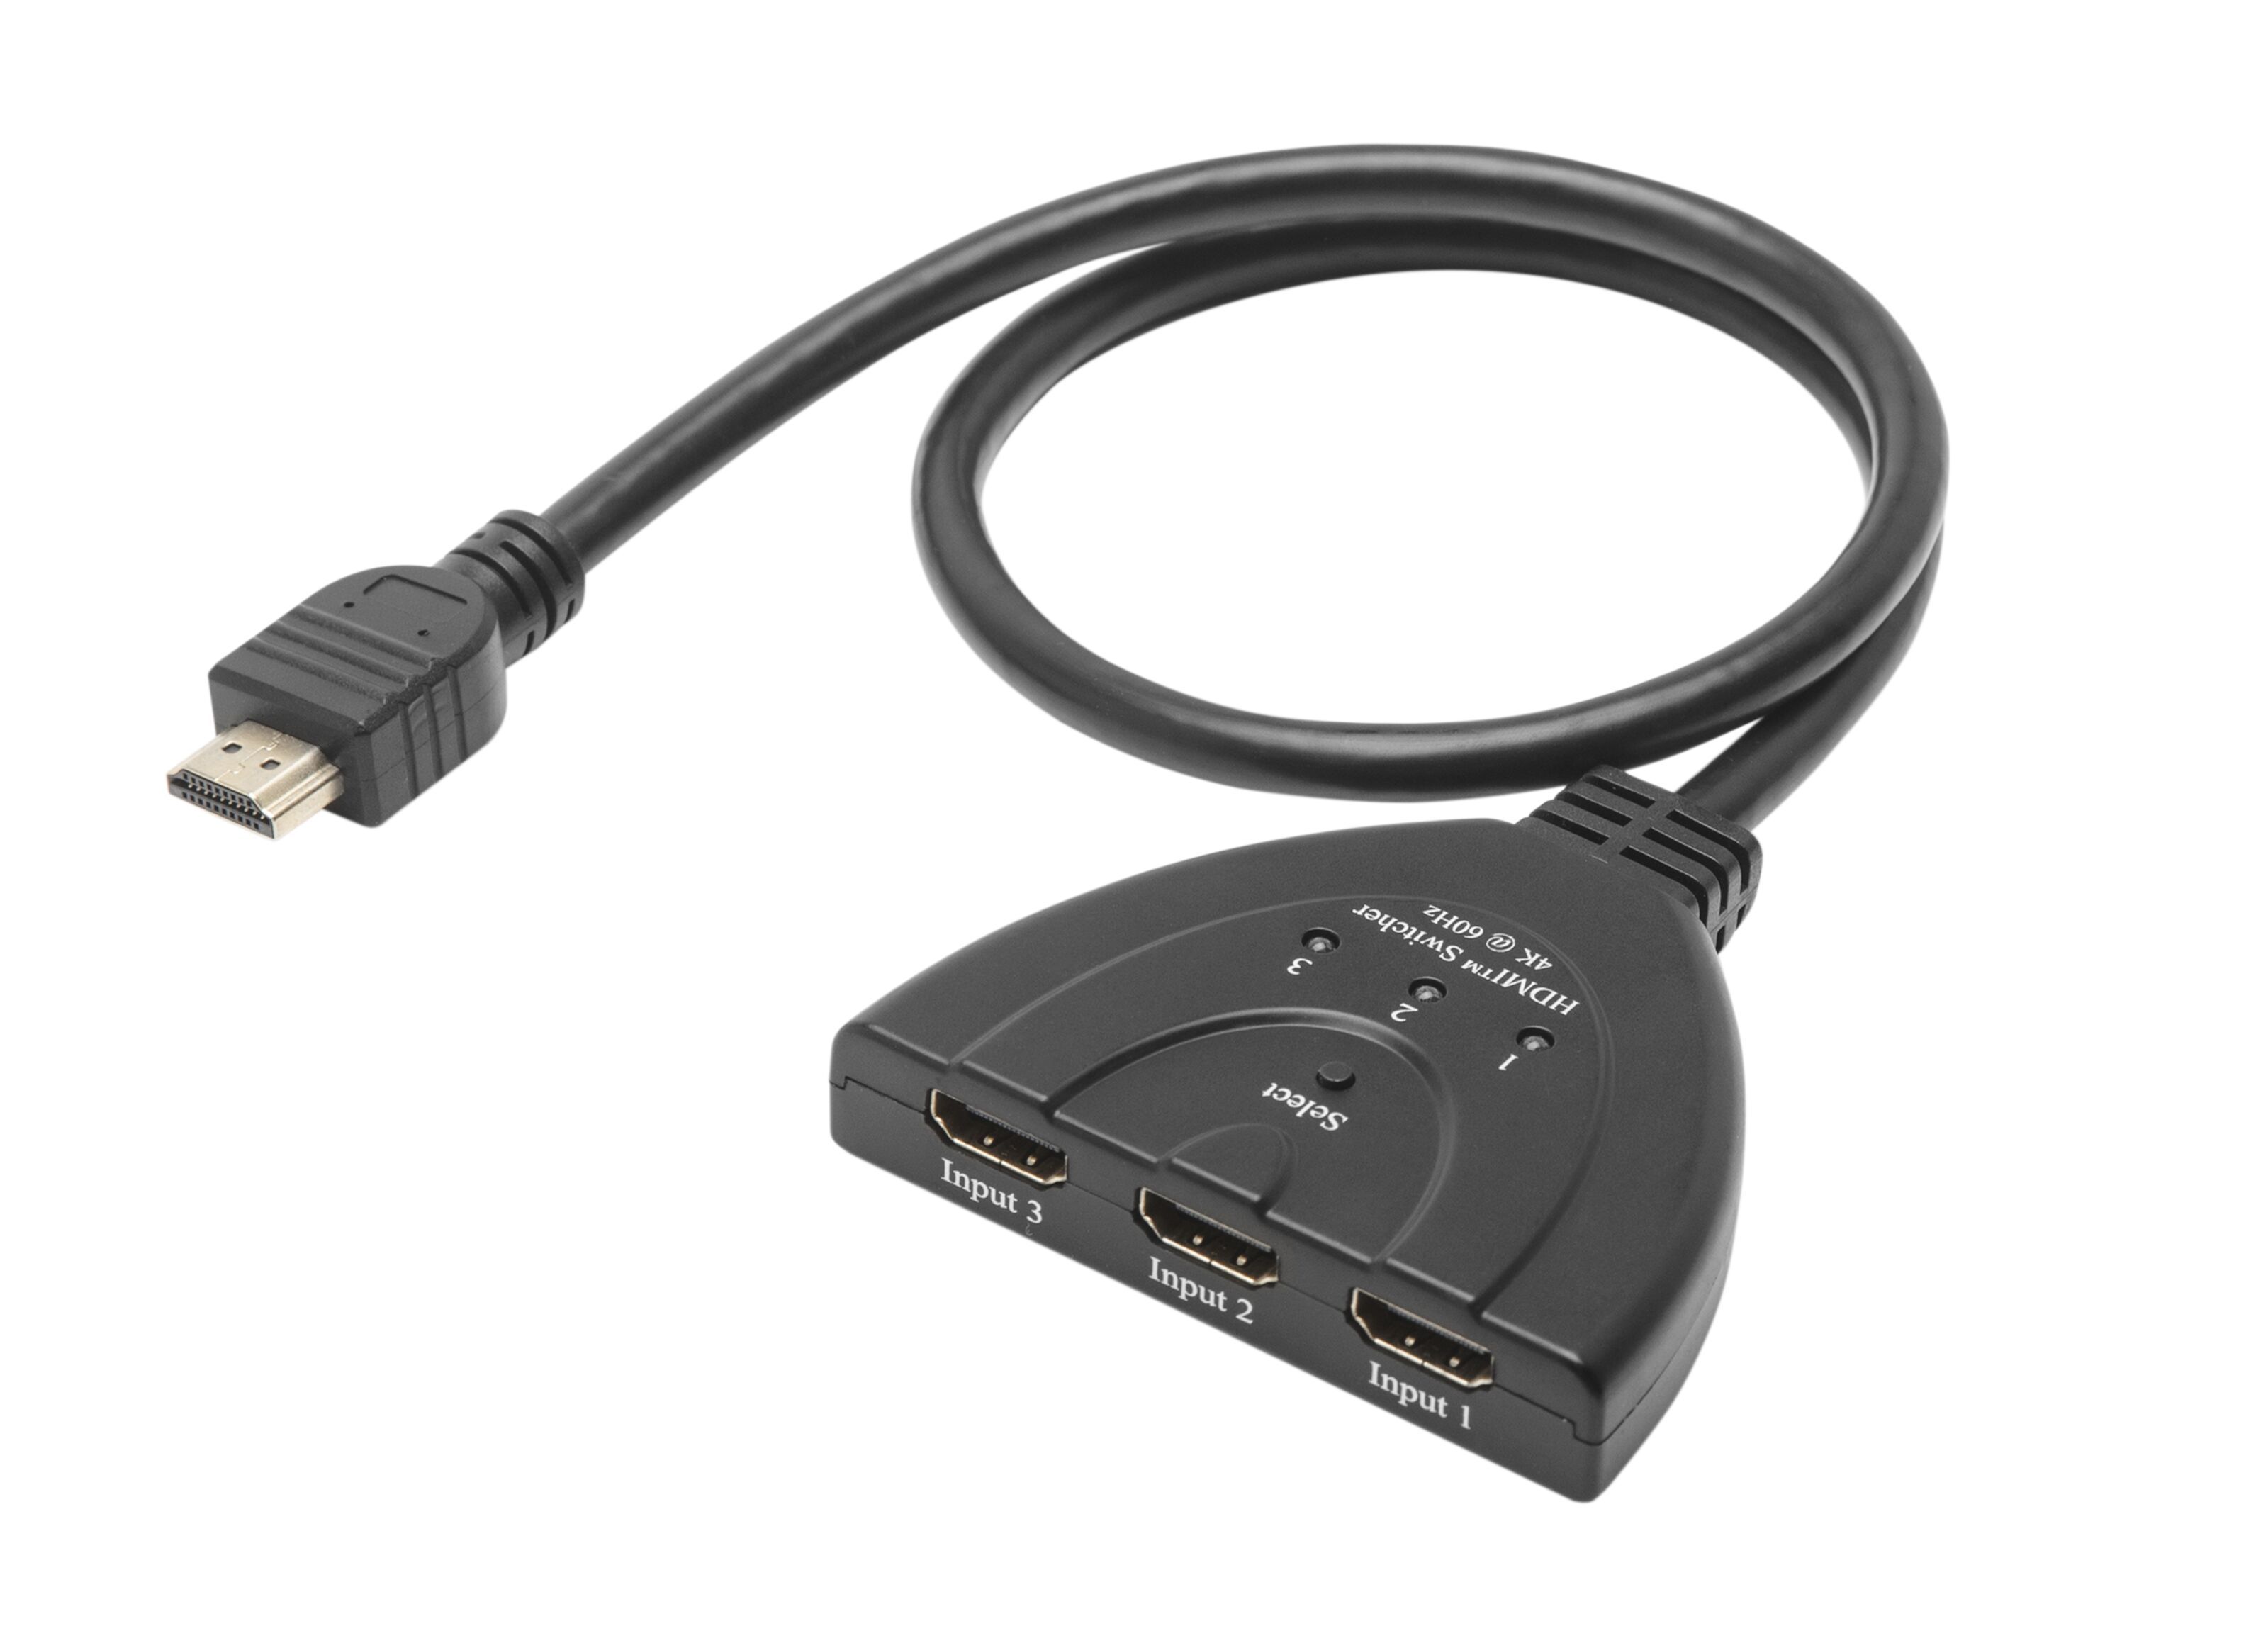 HDMI-switch - HDMI